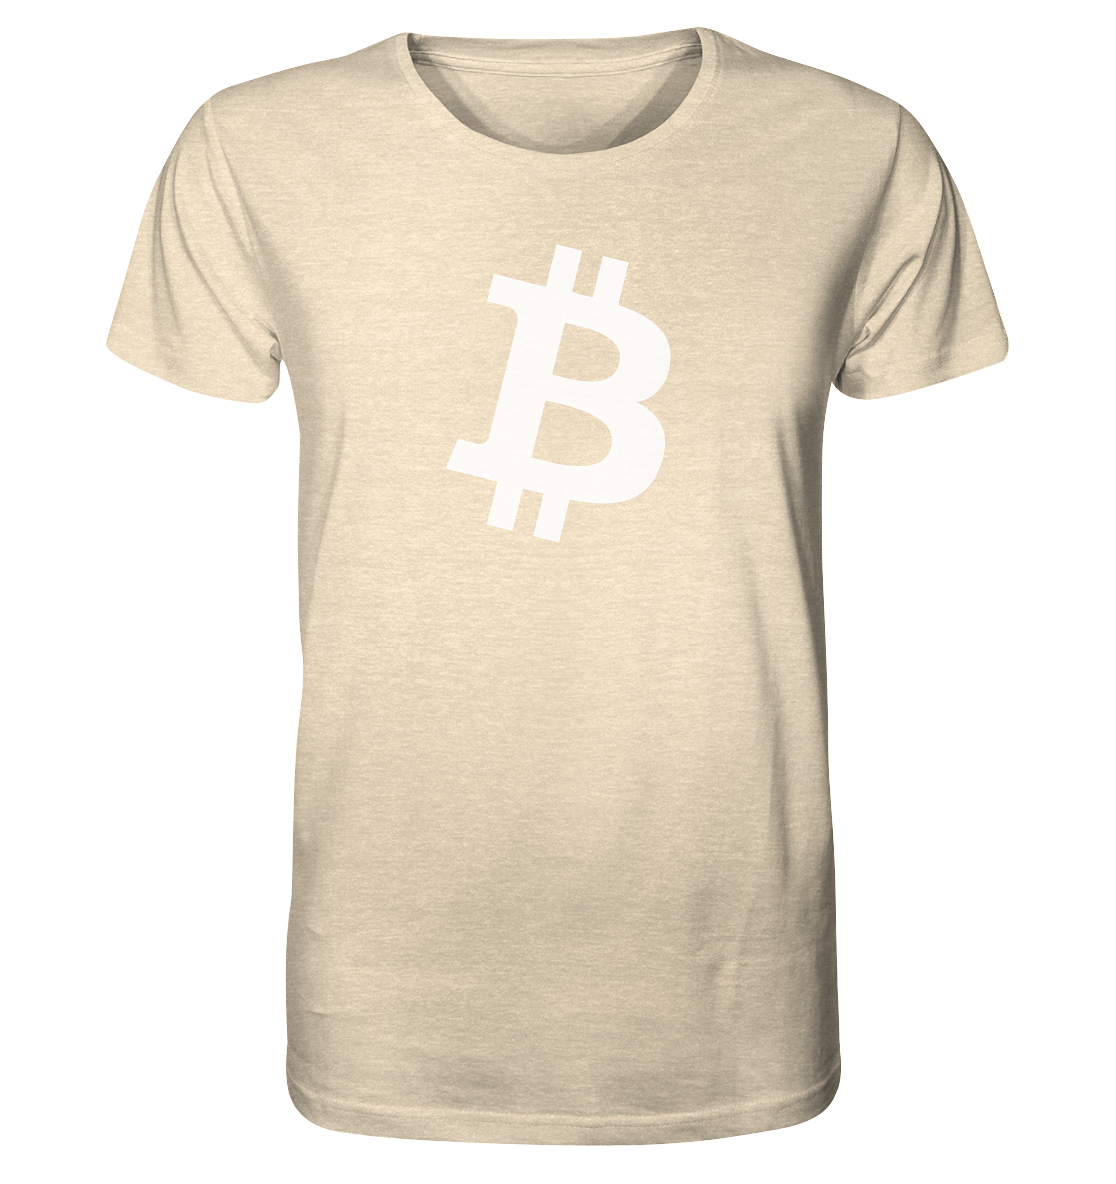 Bitcoin "simple B white" - Organic Shirt